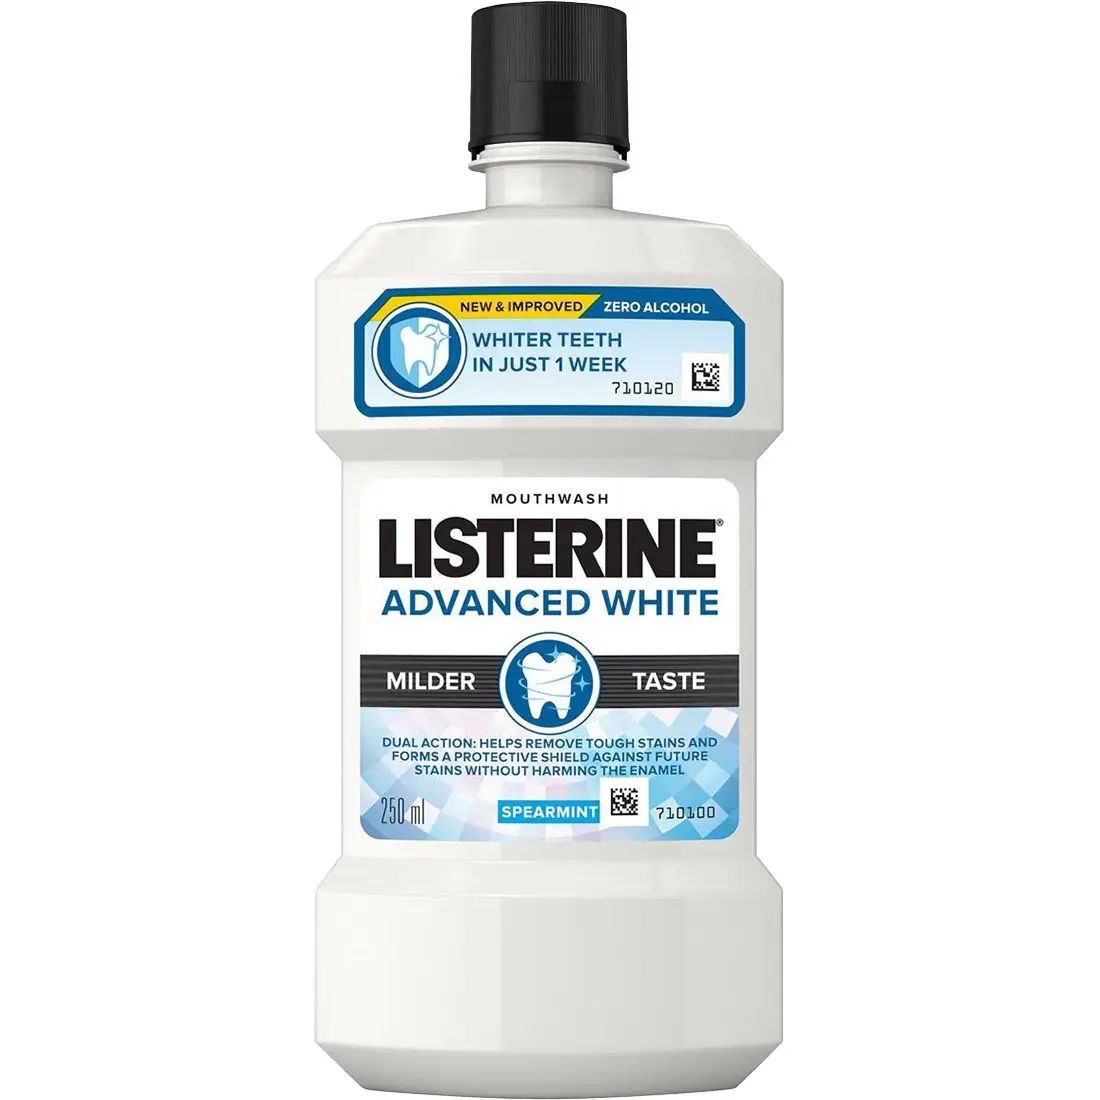 Listerine Mouthwash Advanced White Milder Taste 250ml